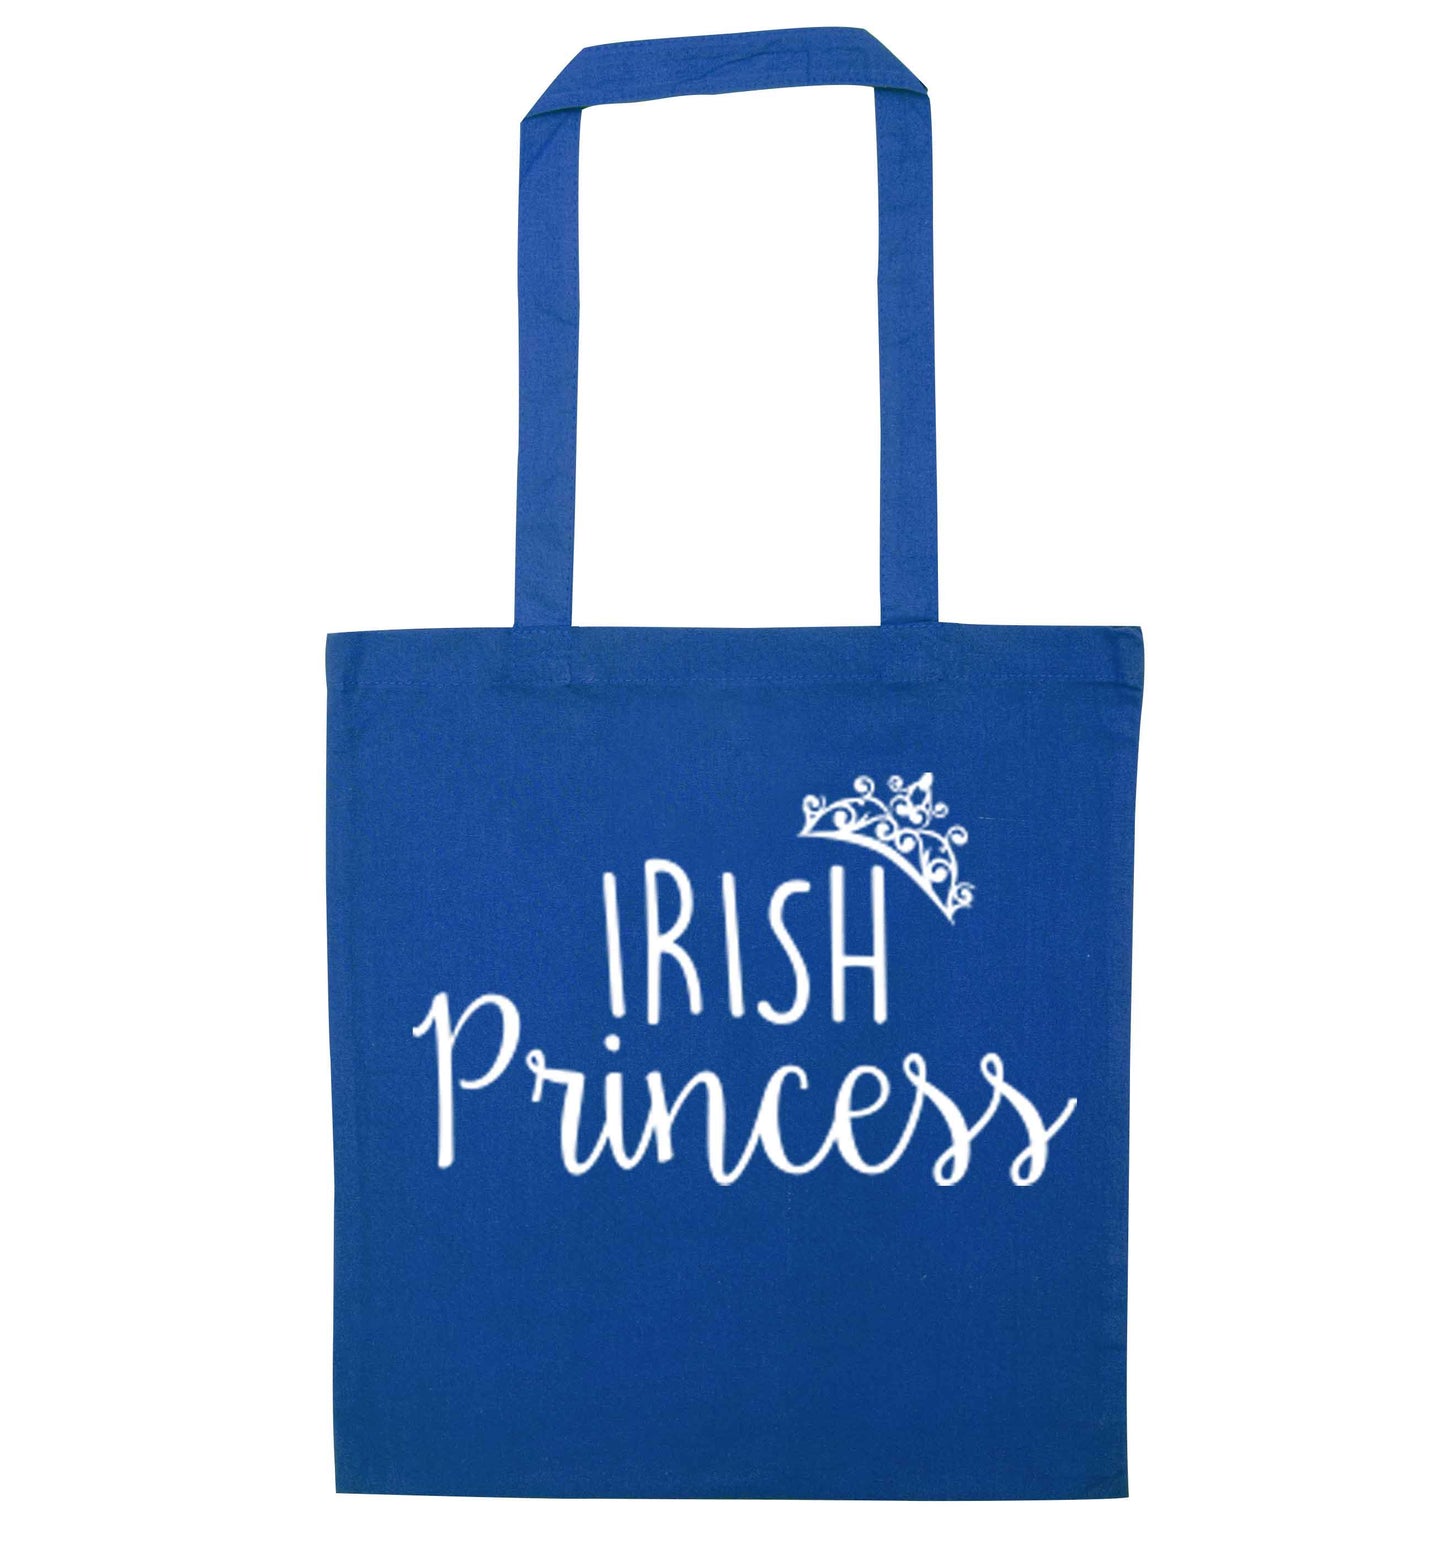 Irish princess blue tote bag